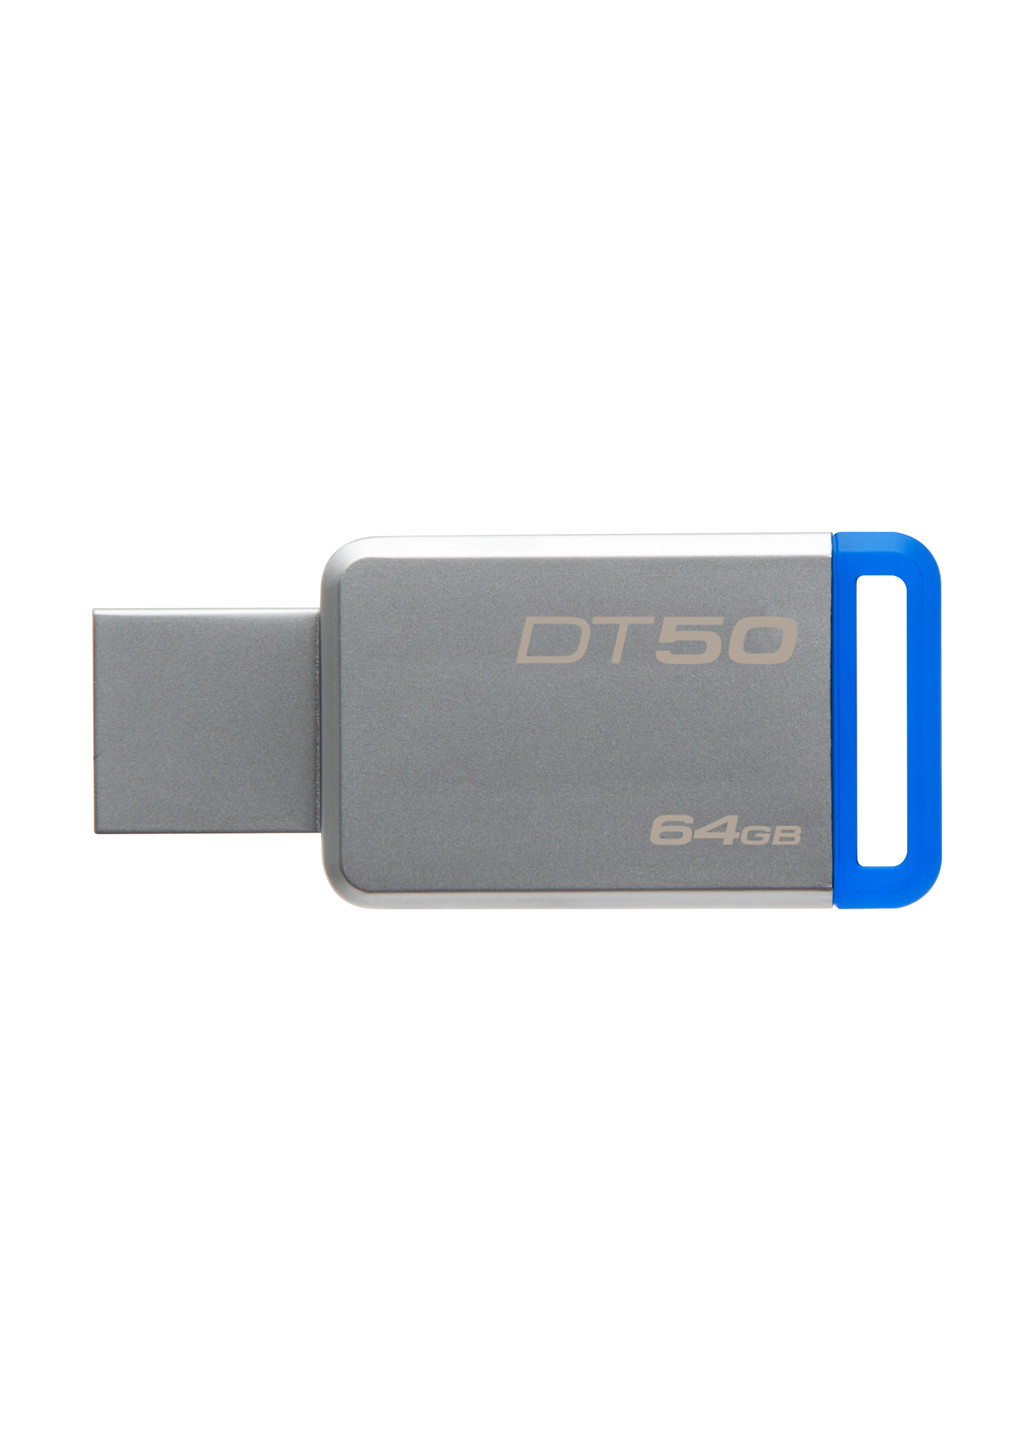 Флеш память USB DataTraveler 50 64GB Blue (DT50/64GB) Kingston флеш память usb kingston datatraveler 50 64gb blue (dt50/64gb) (132638282)